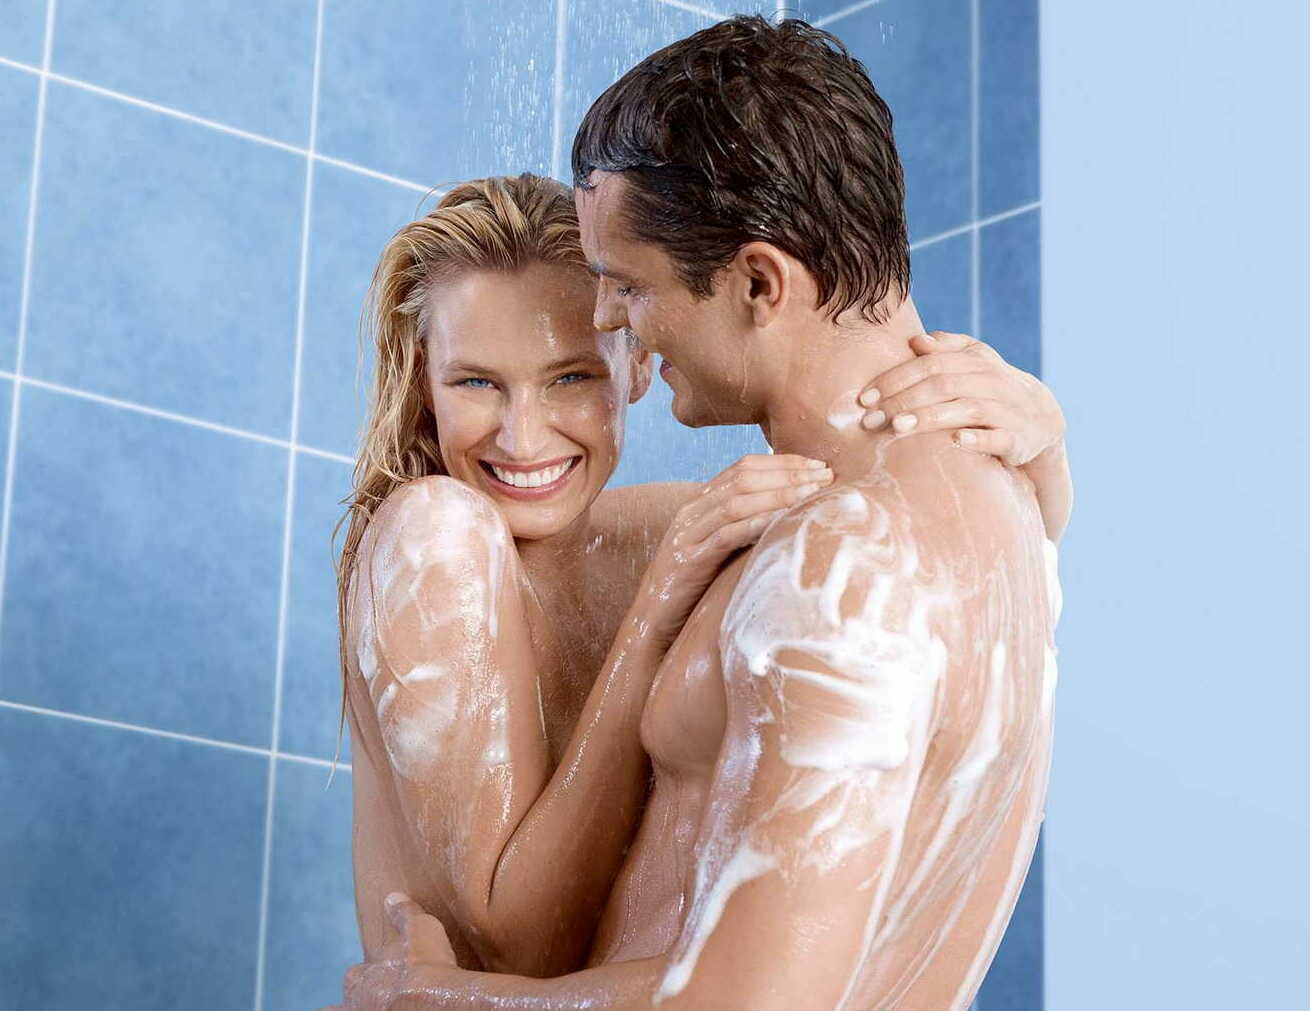 Shower love